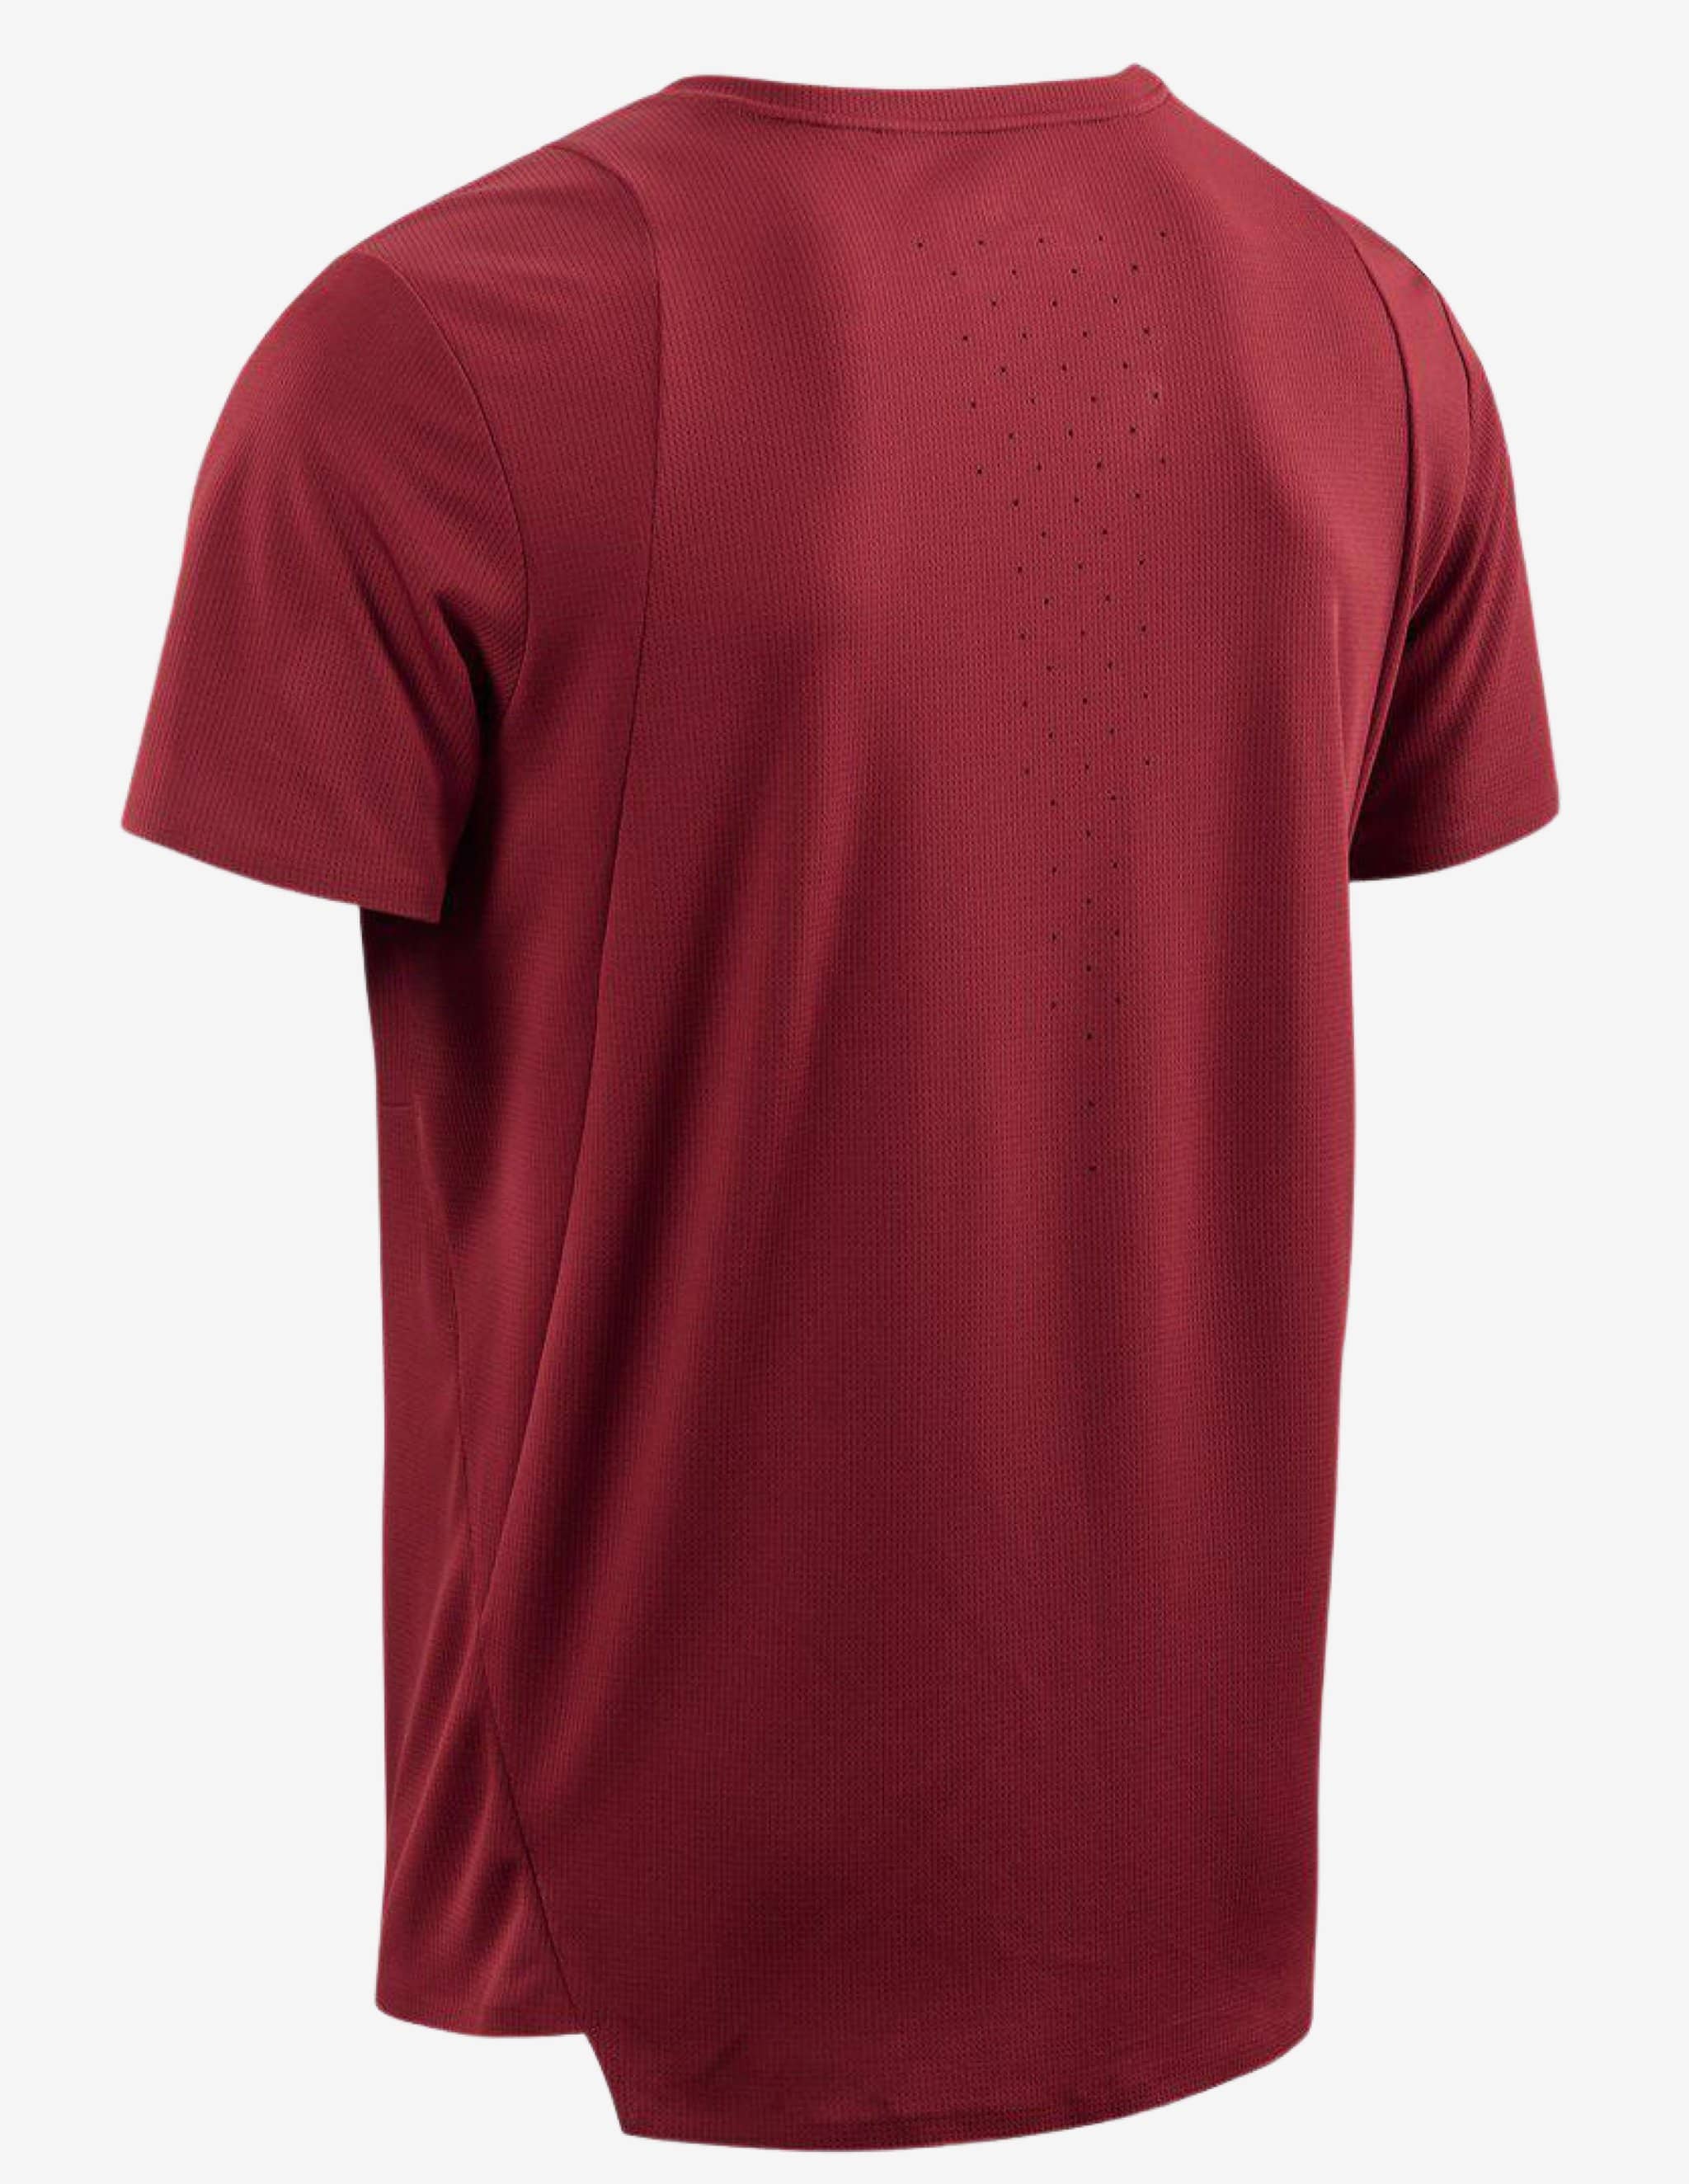 CEP Mens Training Shirt Cherry Red-T-shirt Man-CEP Compression-Guru Muscle